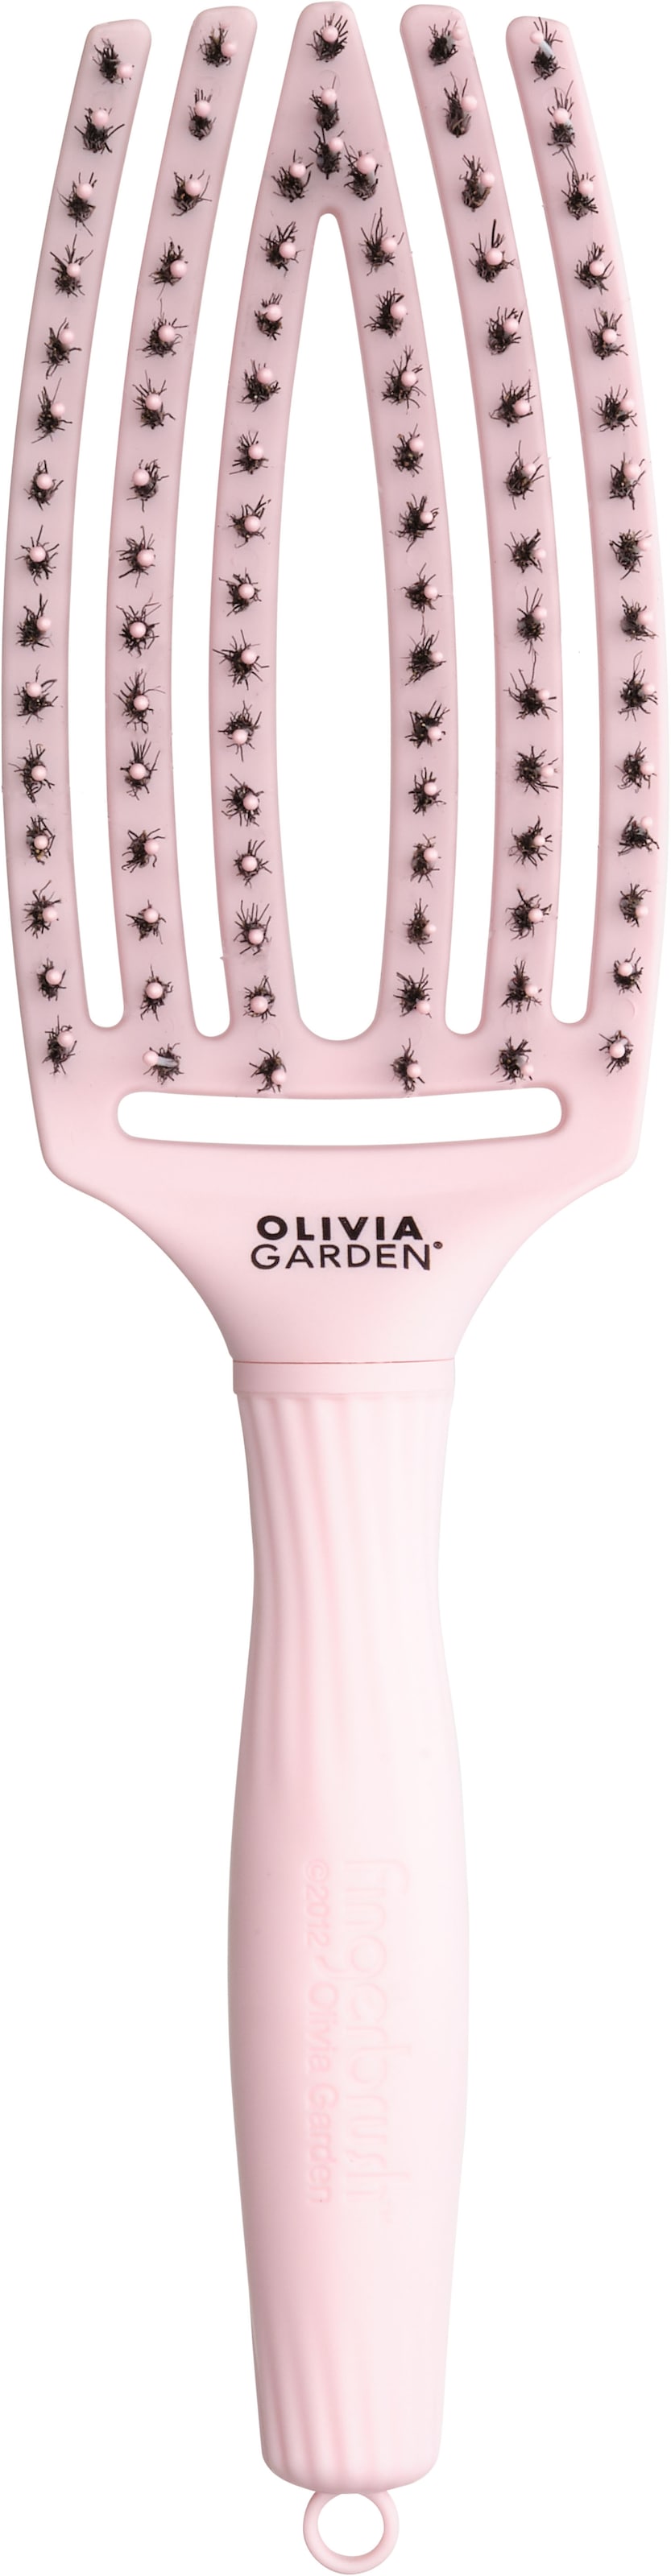 medium« OLIVIA Haarentwirrbürste »Fingerbrush GARDEN Pink Combo kaufen